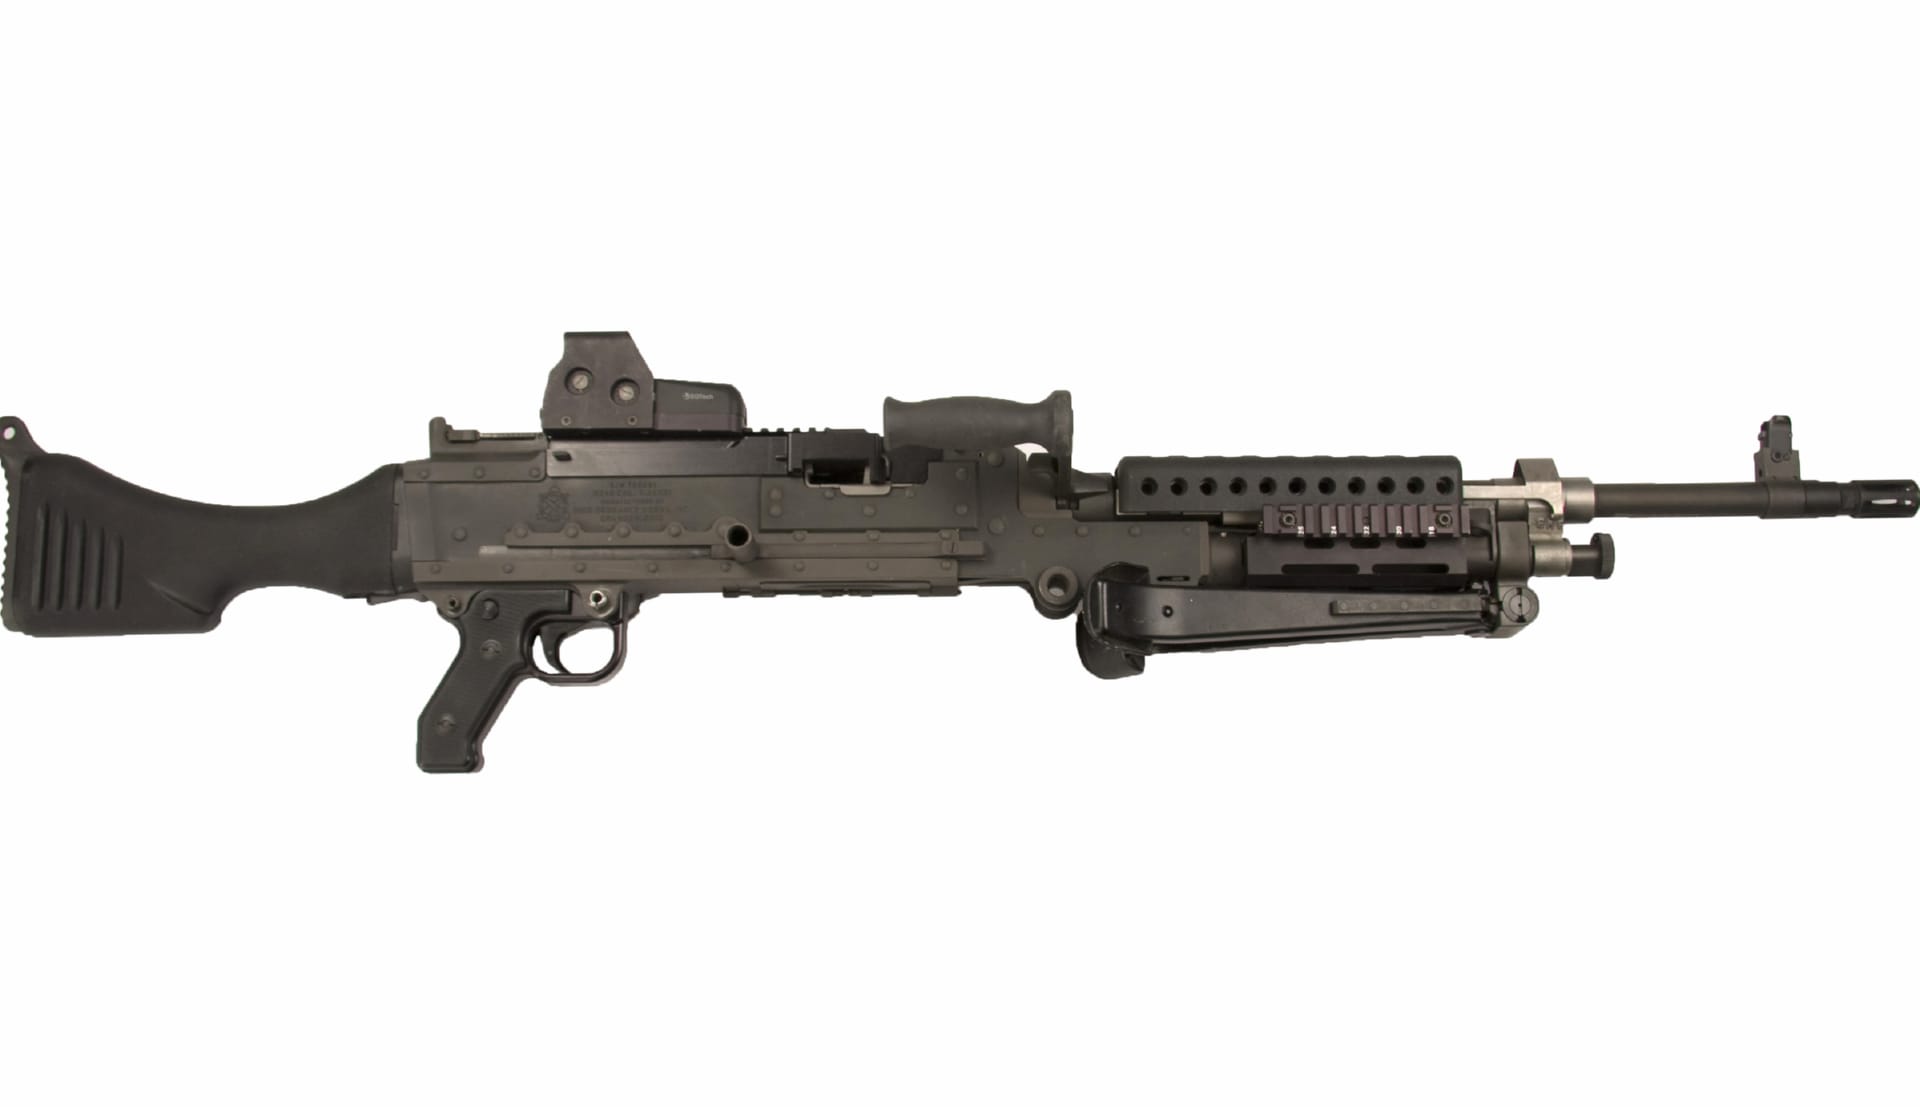 M240 machine gun at 1024 x 1024 iPad size wallpapers HD quality